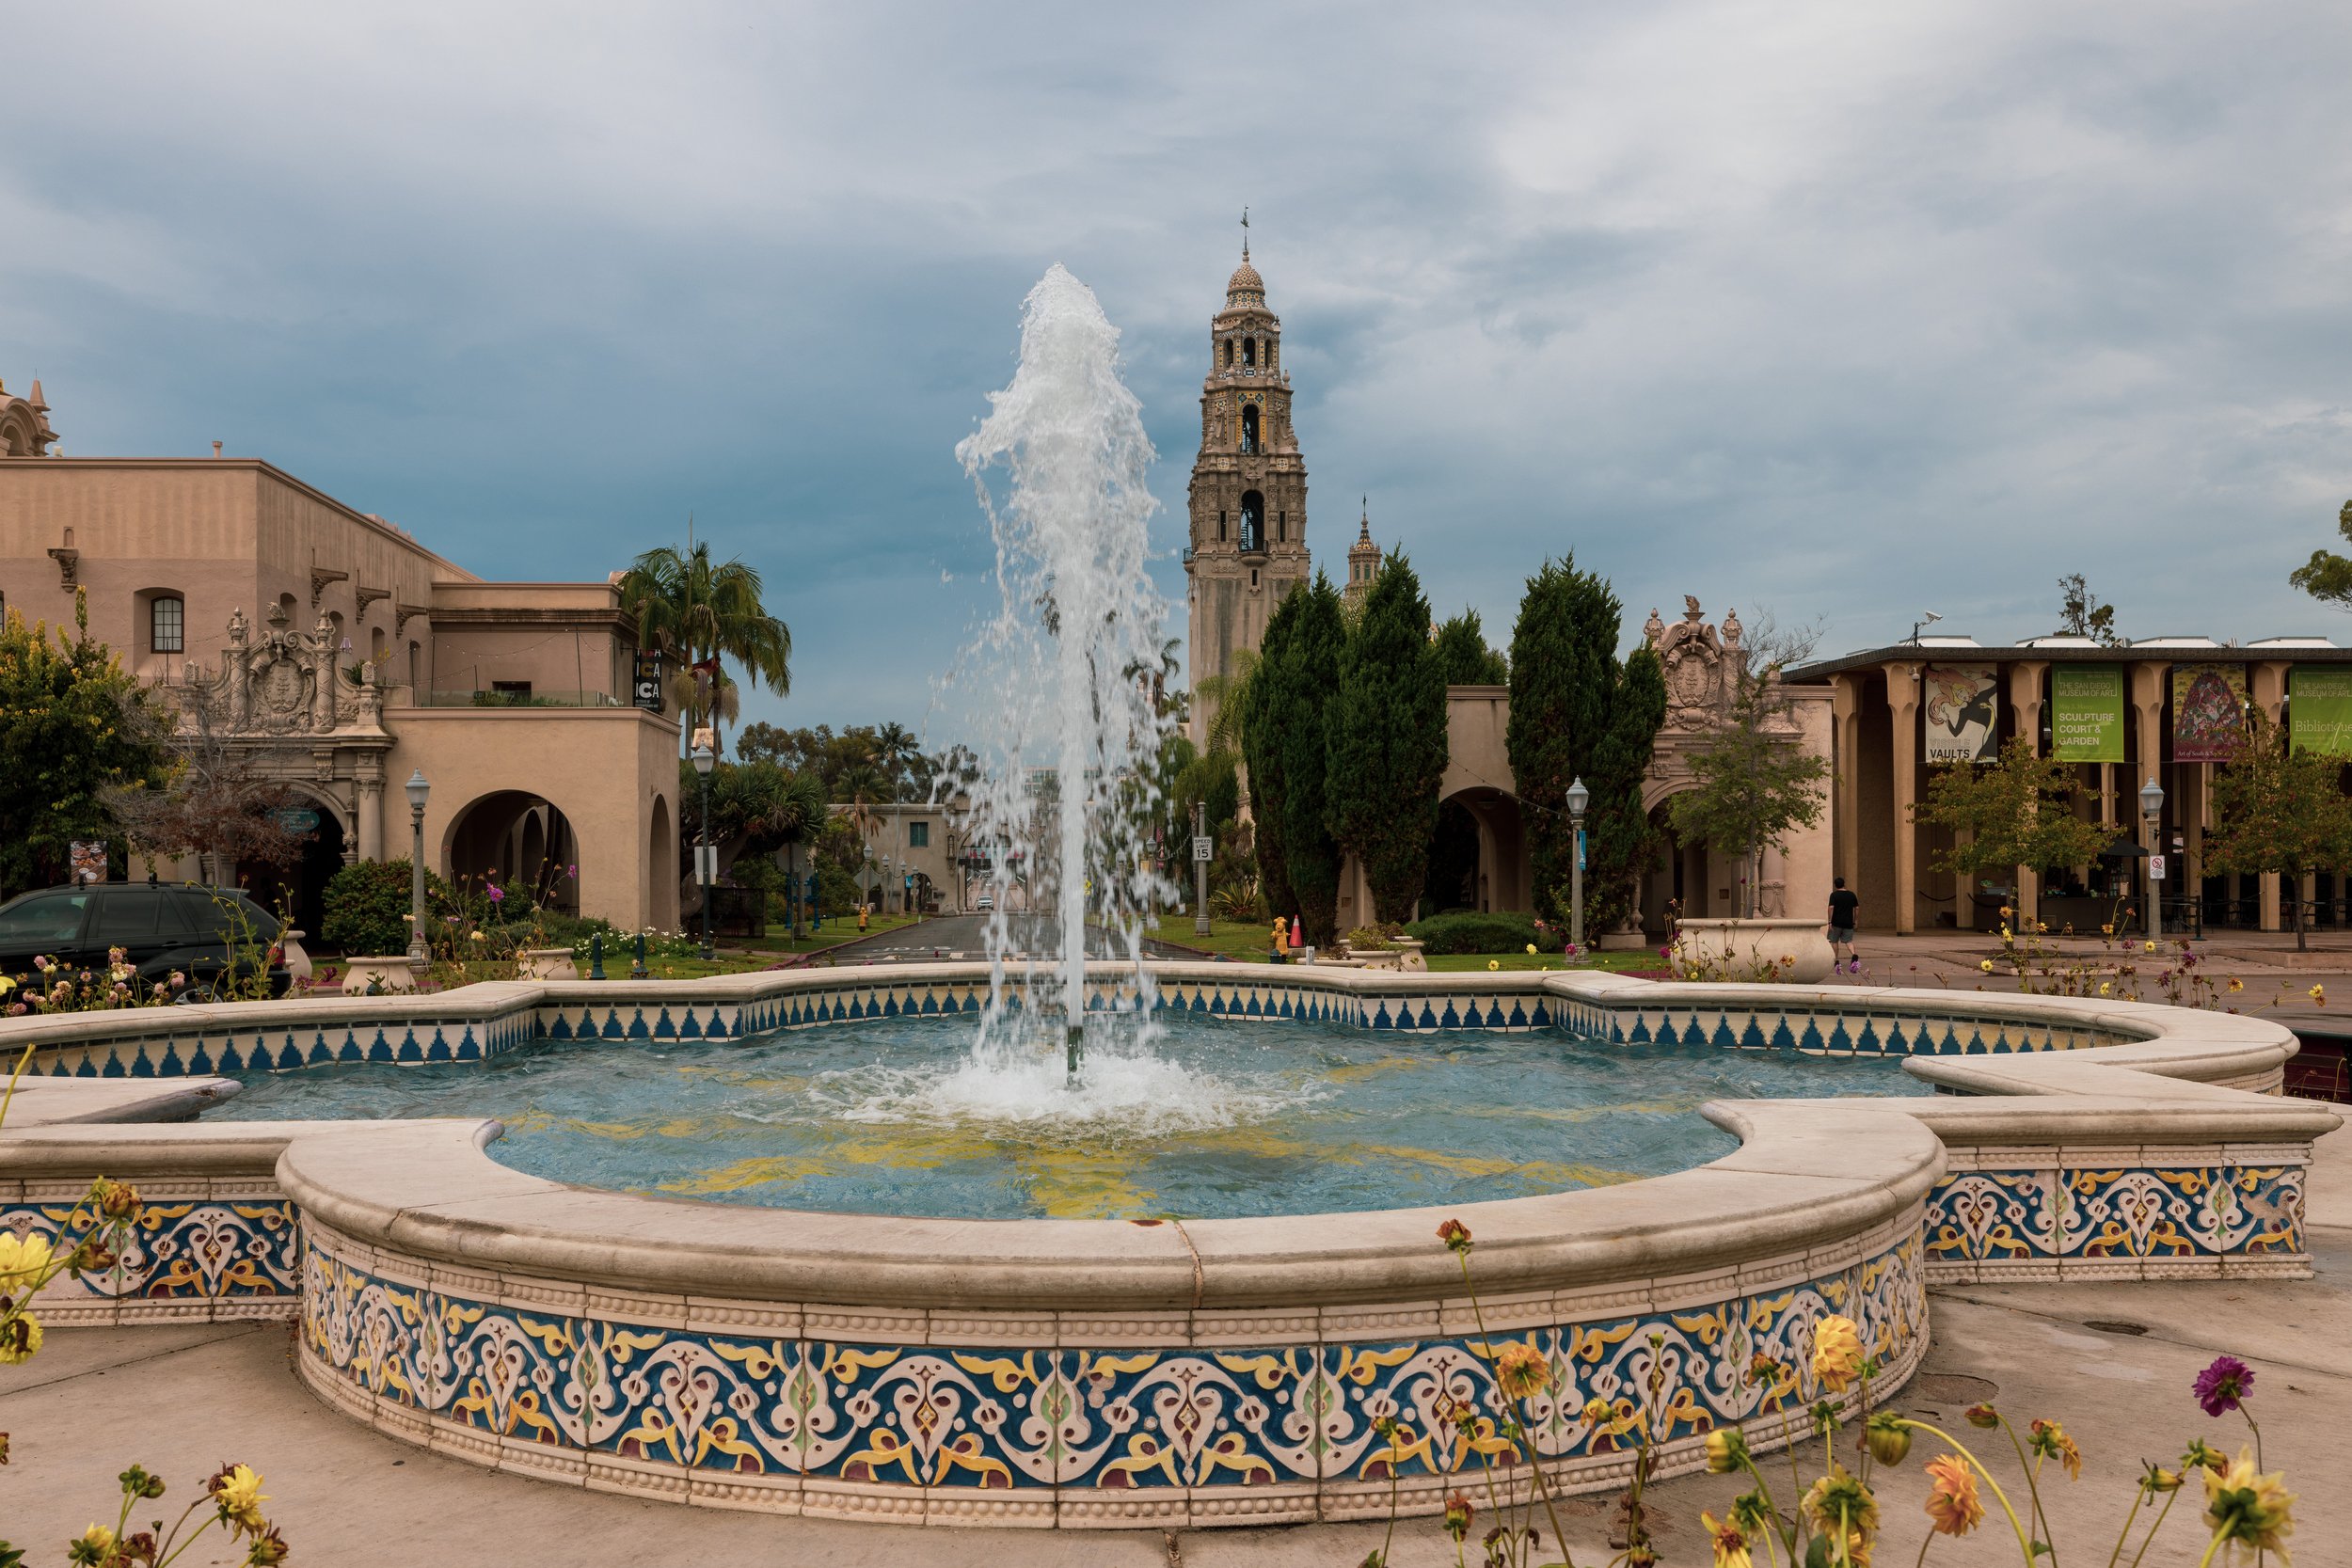 Balboa Fountain and Spire-0008.jpg